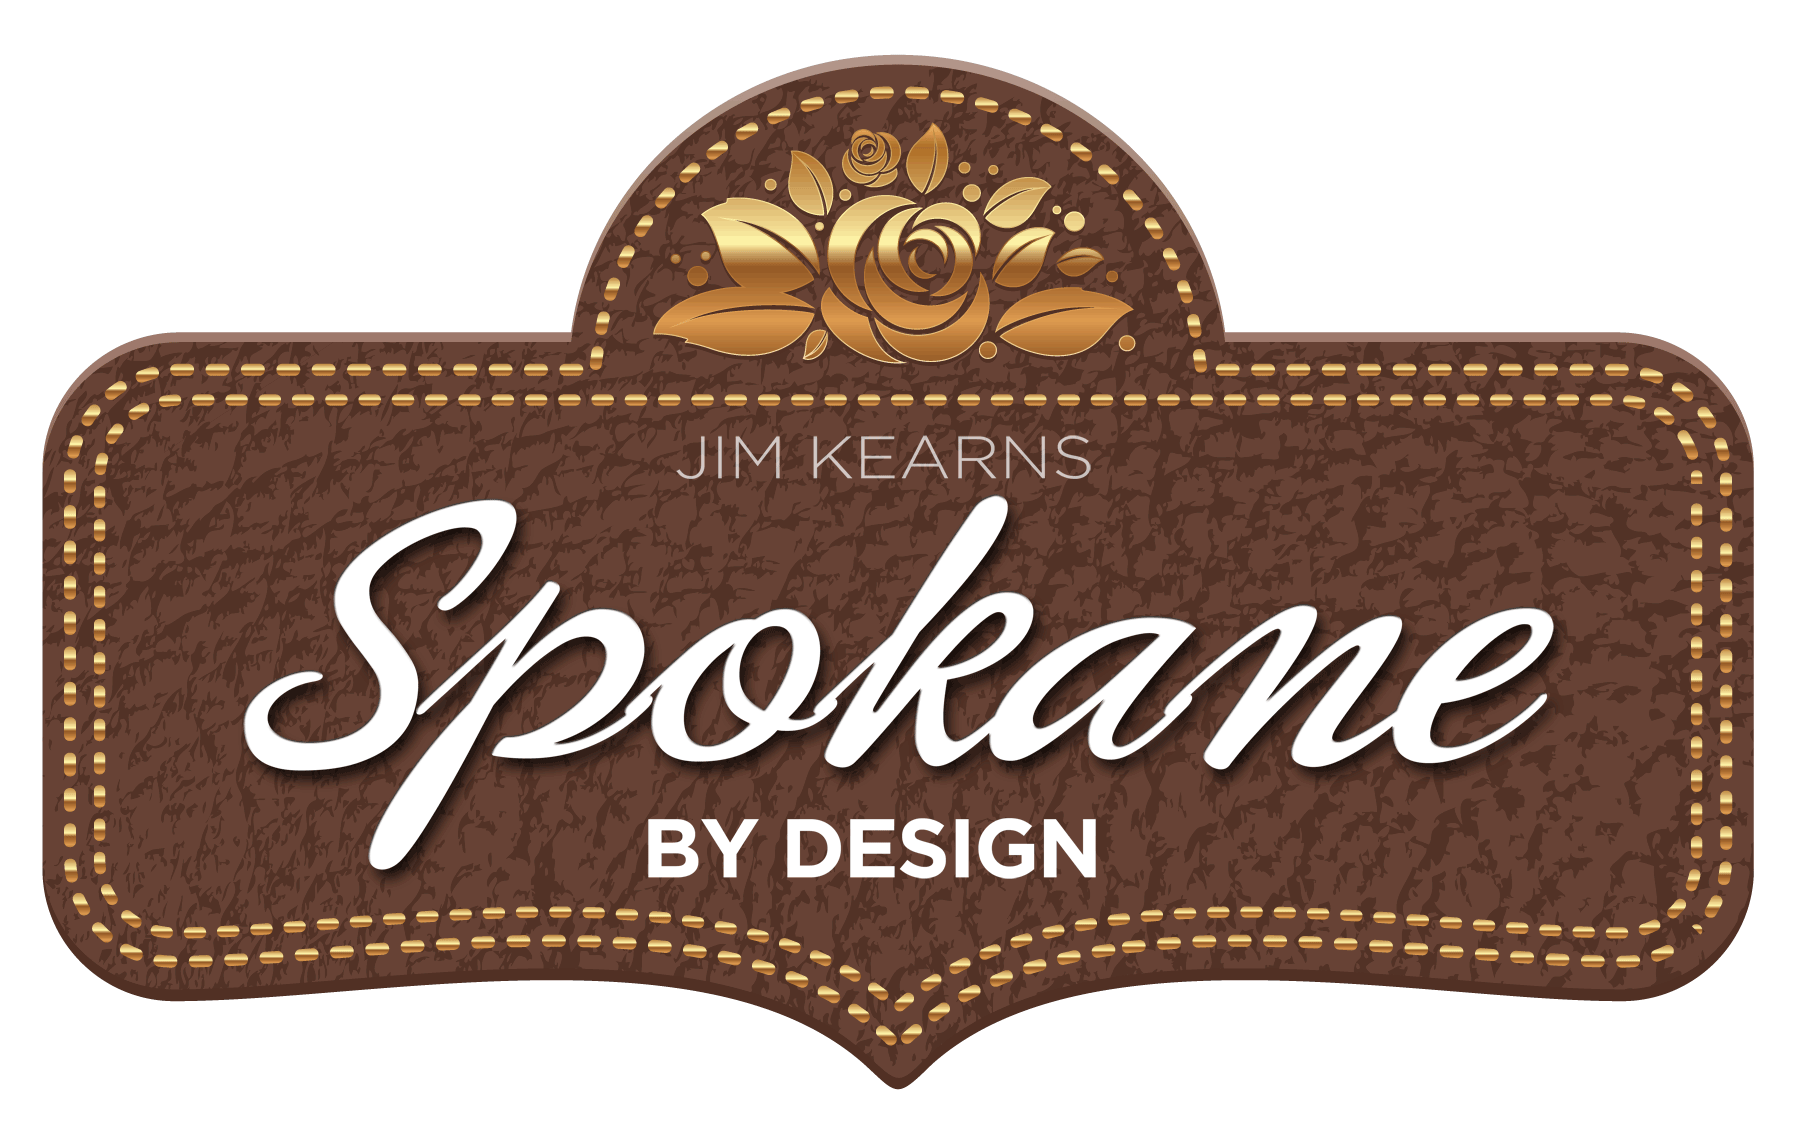 Spokane by Design